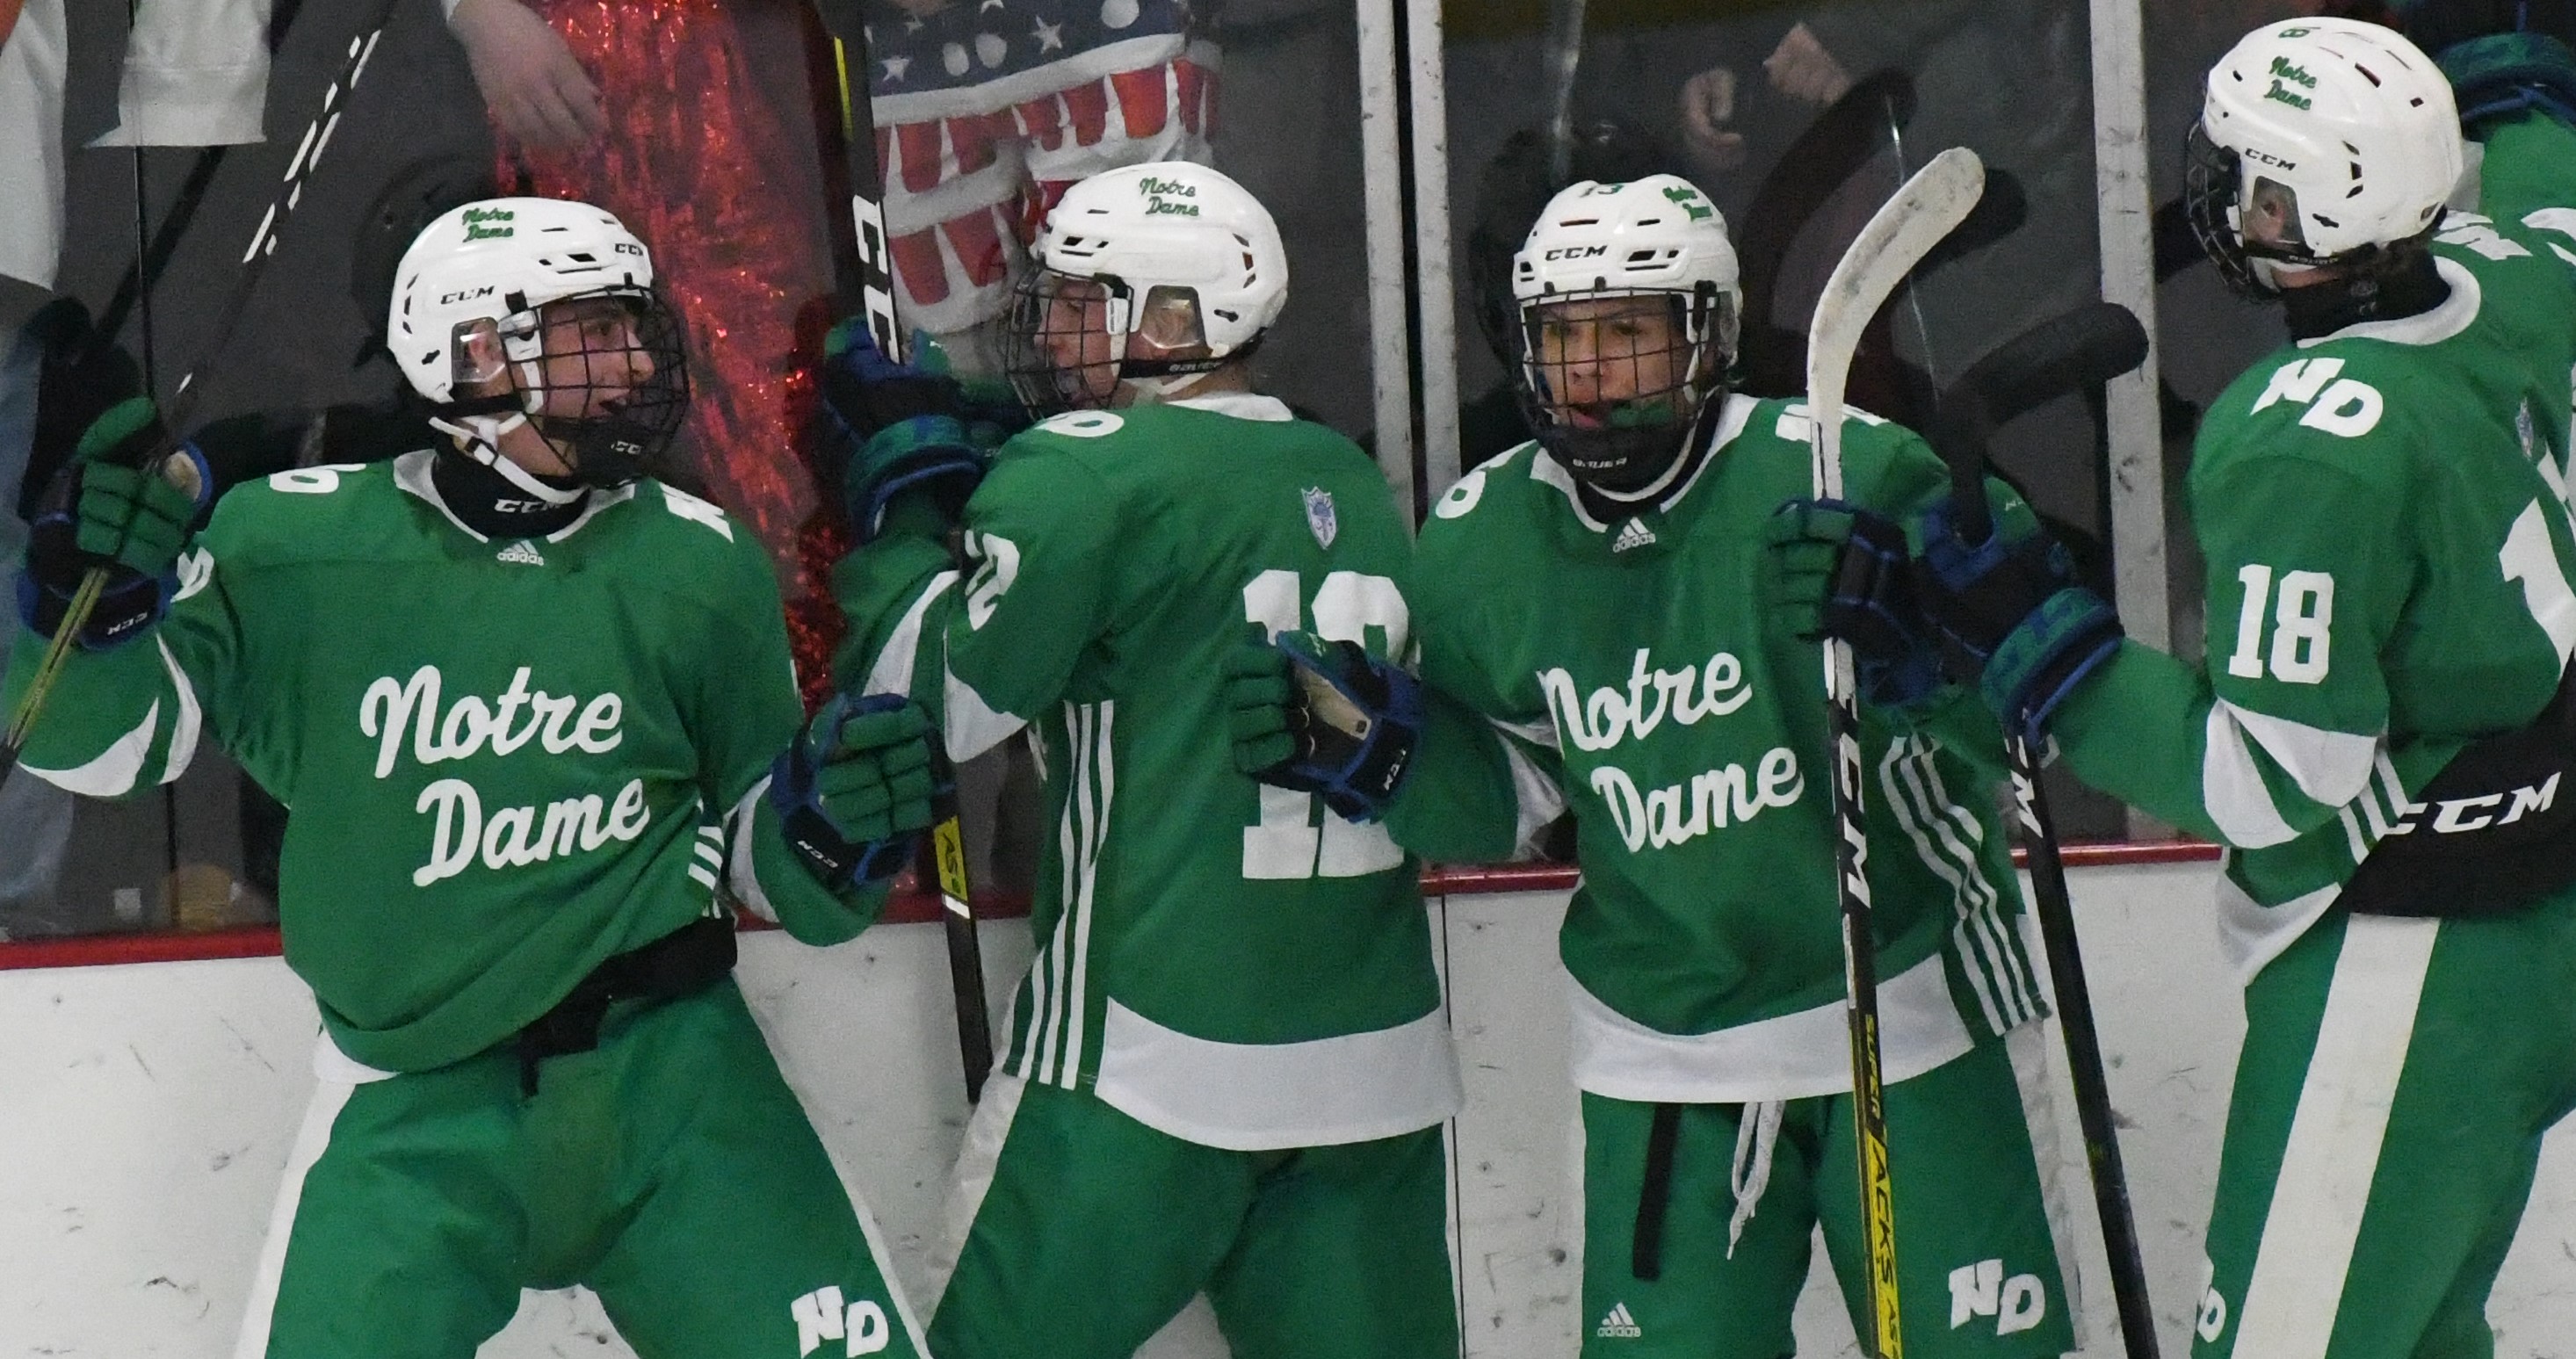 hockey team with green jerseys